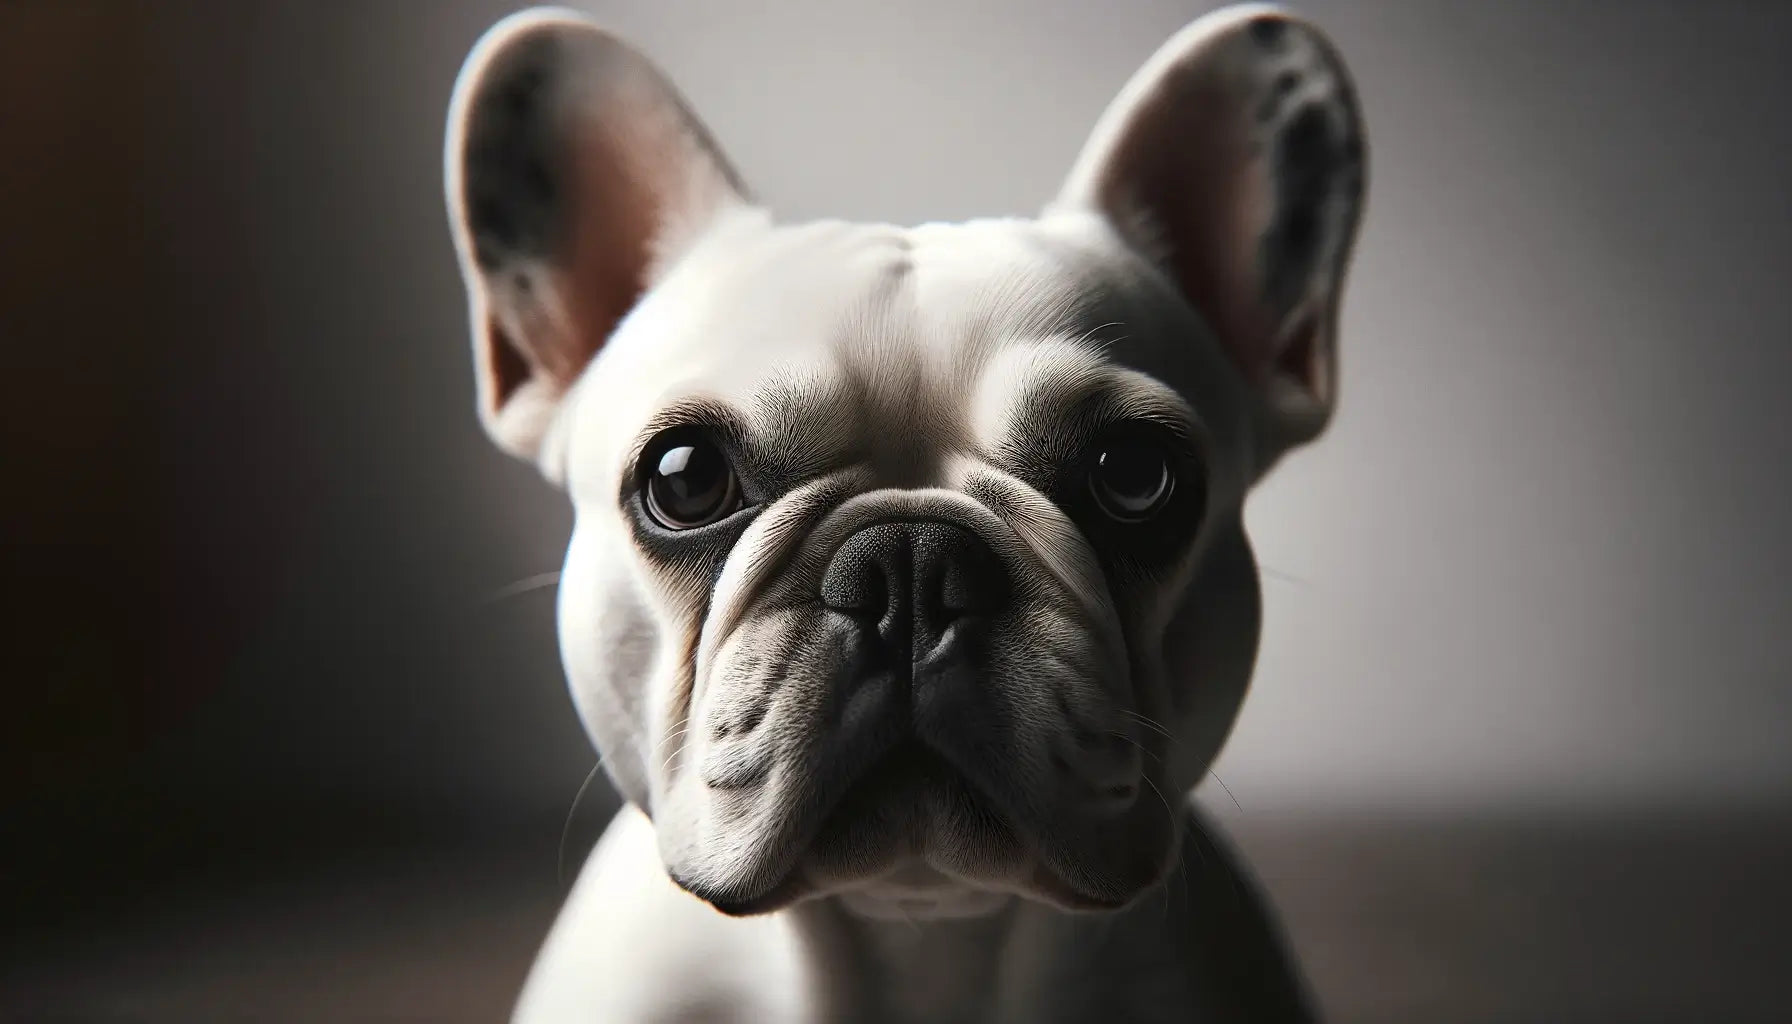 White French Bulldog capturing its soulful eyes and observant gaze.